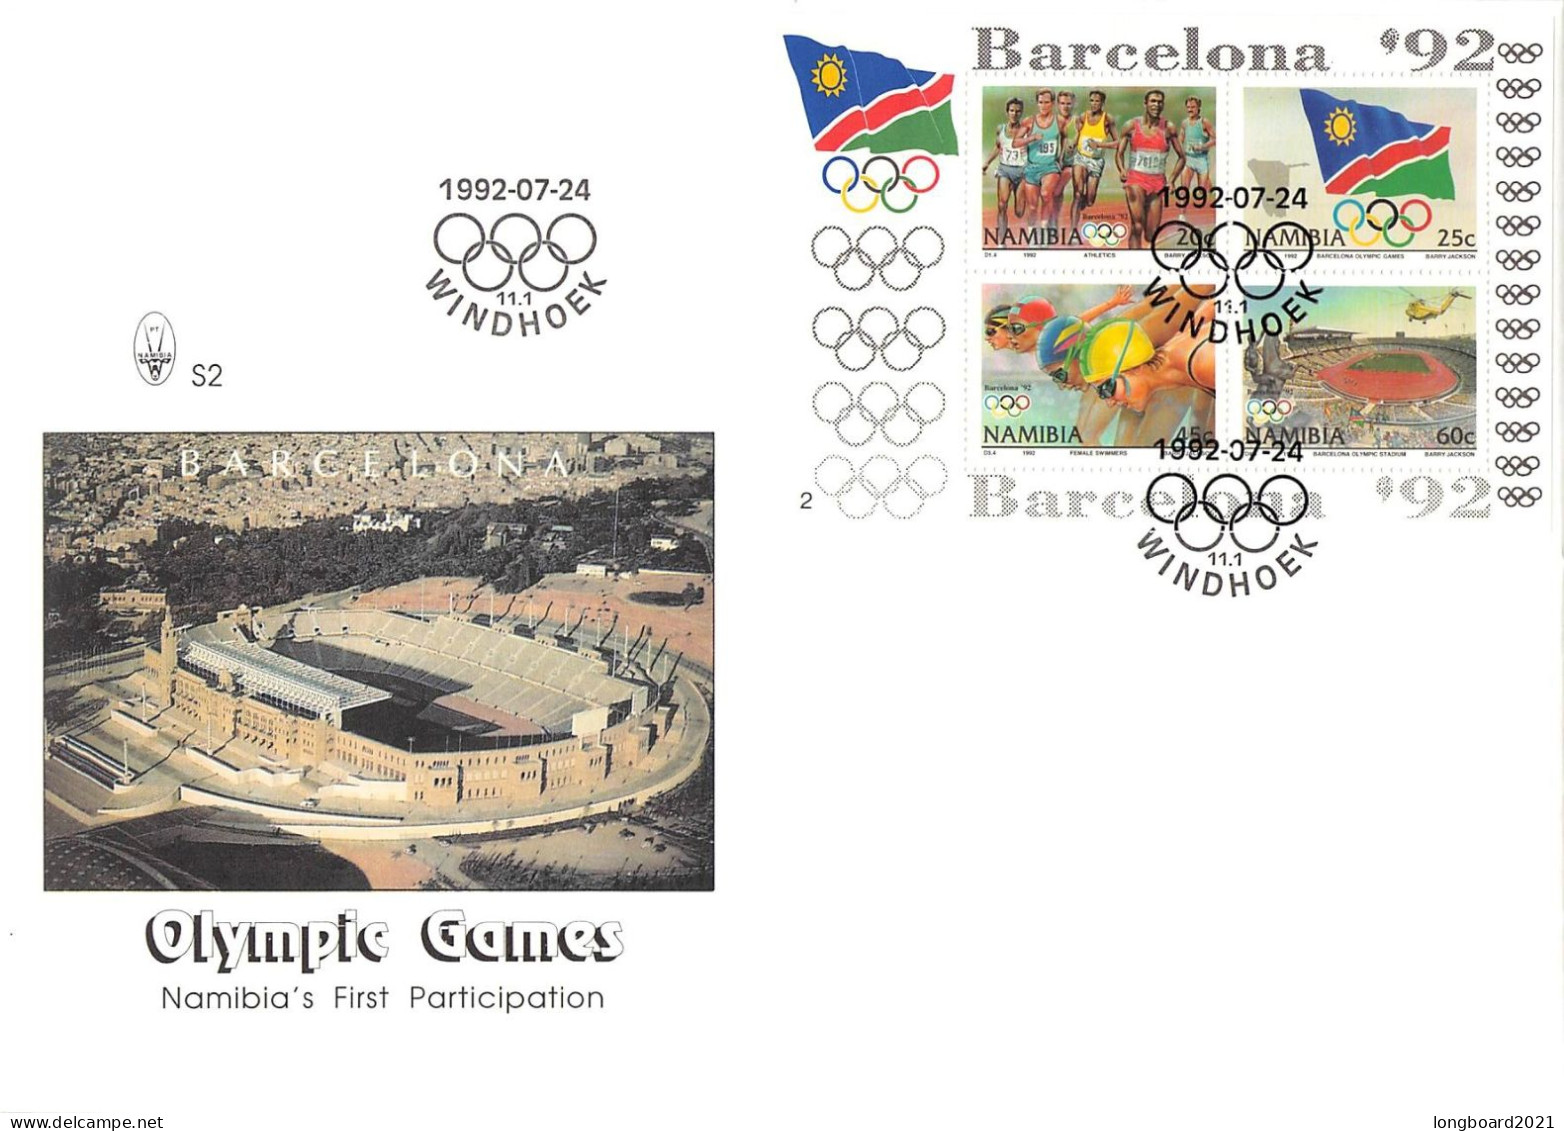 NAMIBIA - FDC MINISHEET 1992 - OLYMPICS BARCELONA /4356 - Namibia (1990- ...)